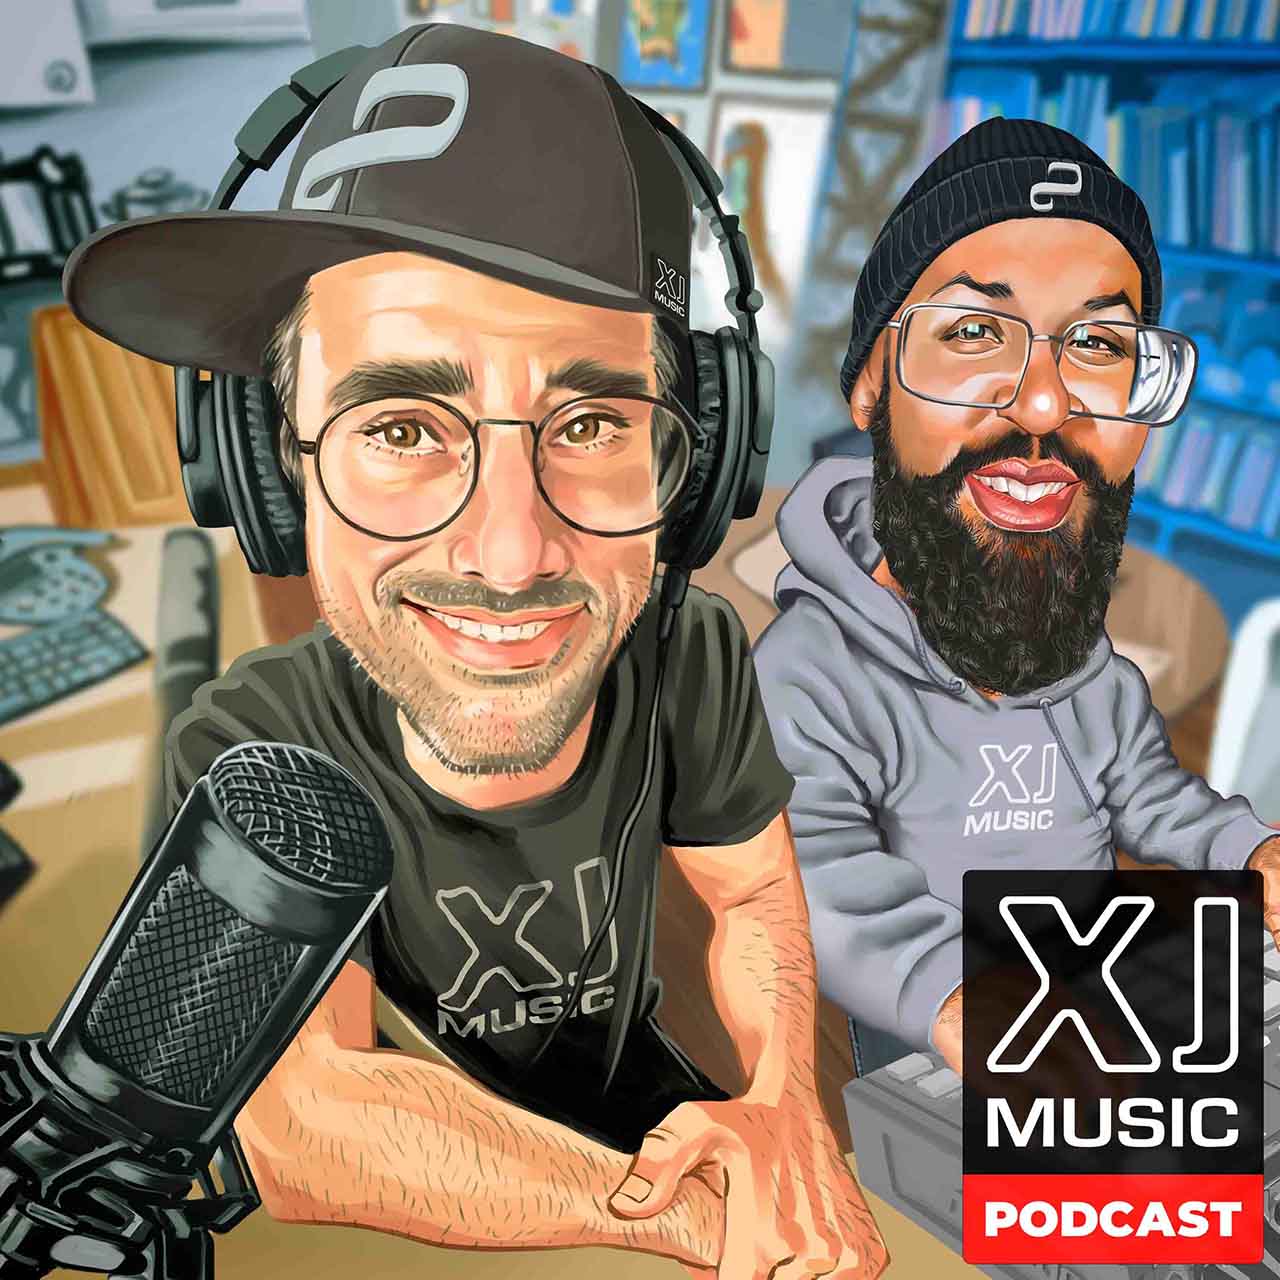 XJ music podcast